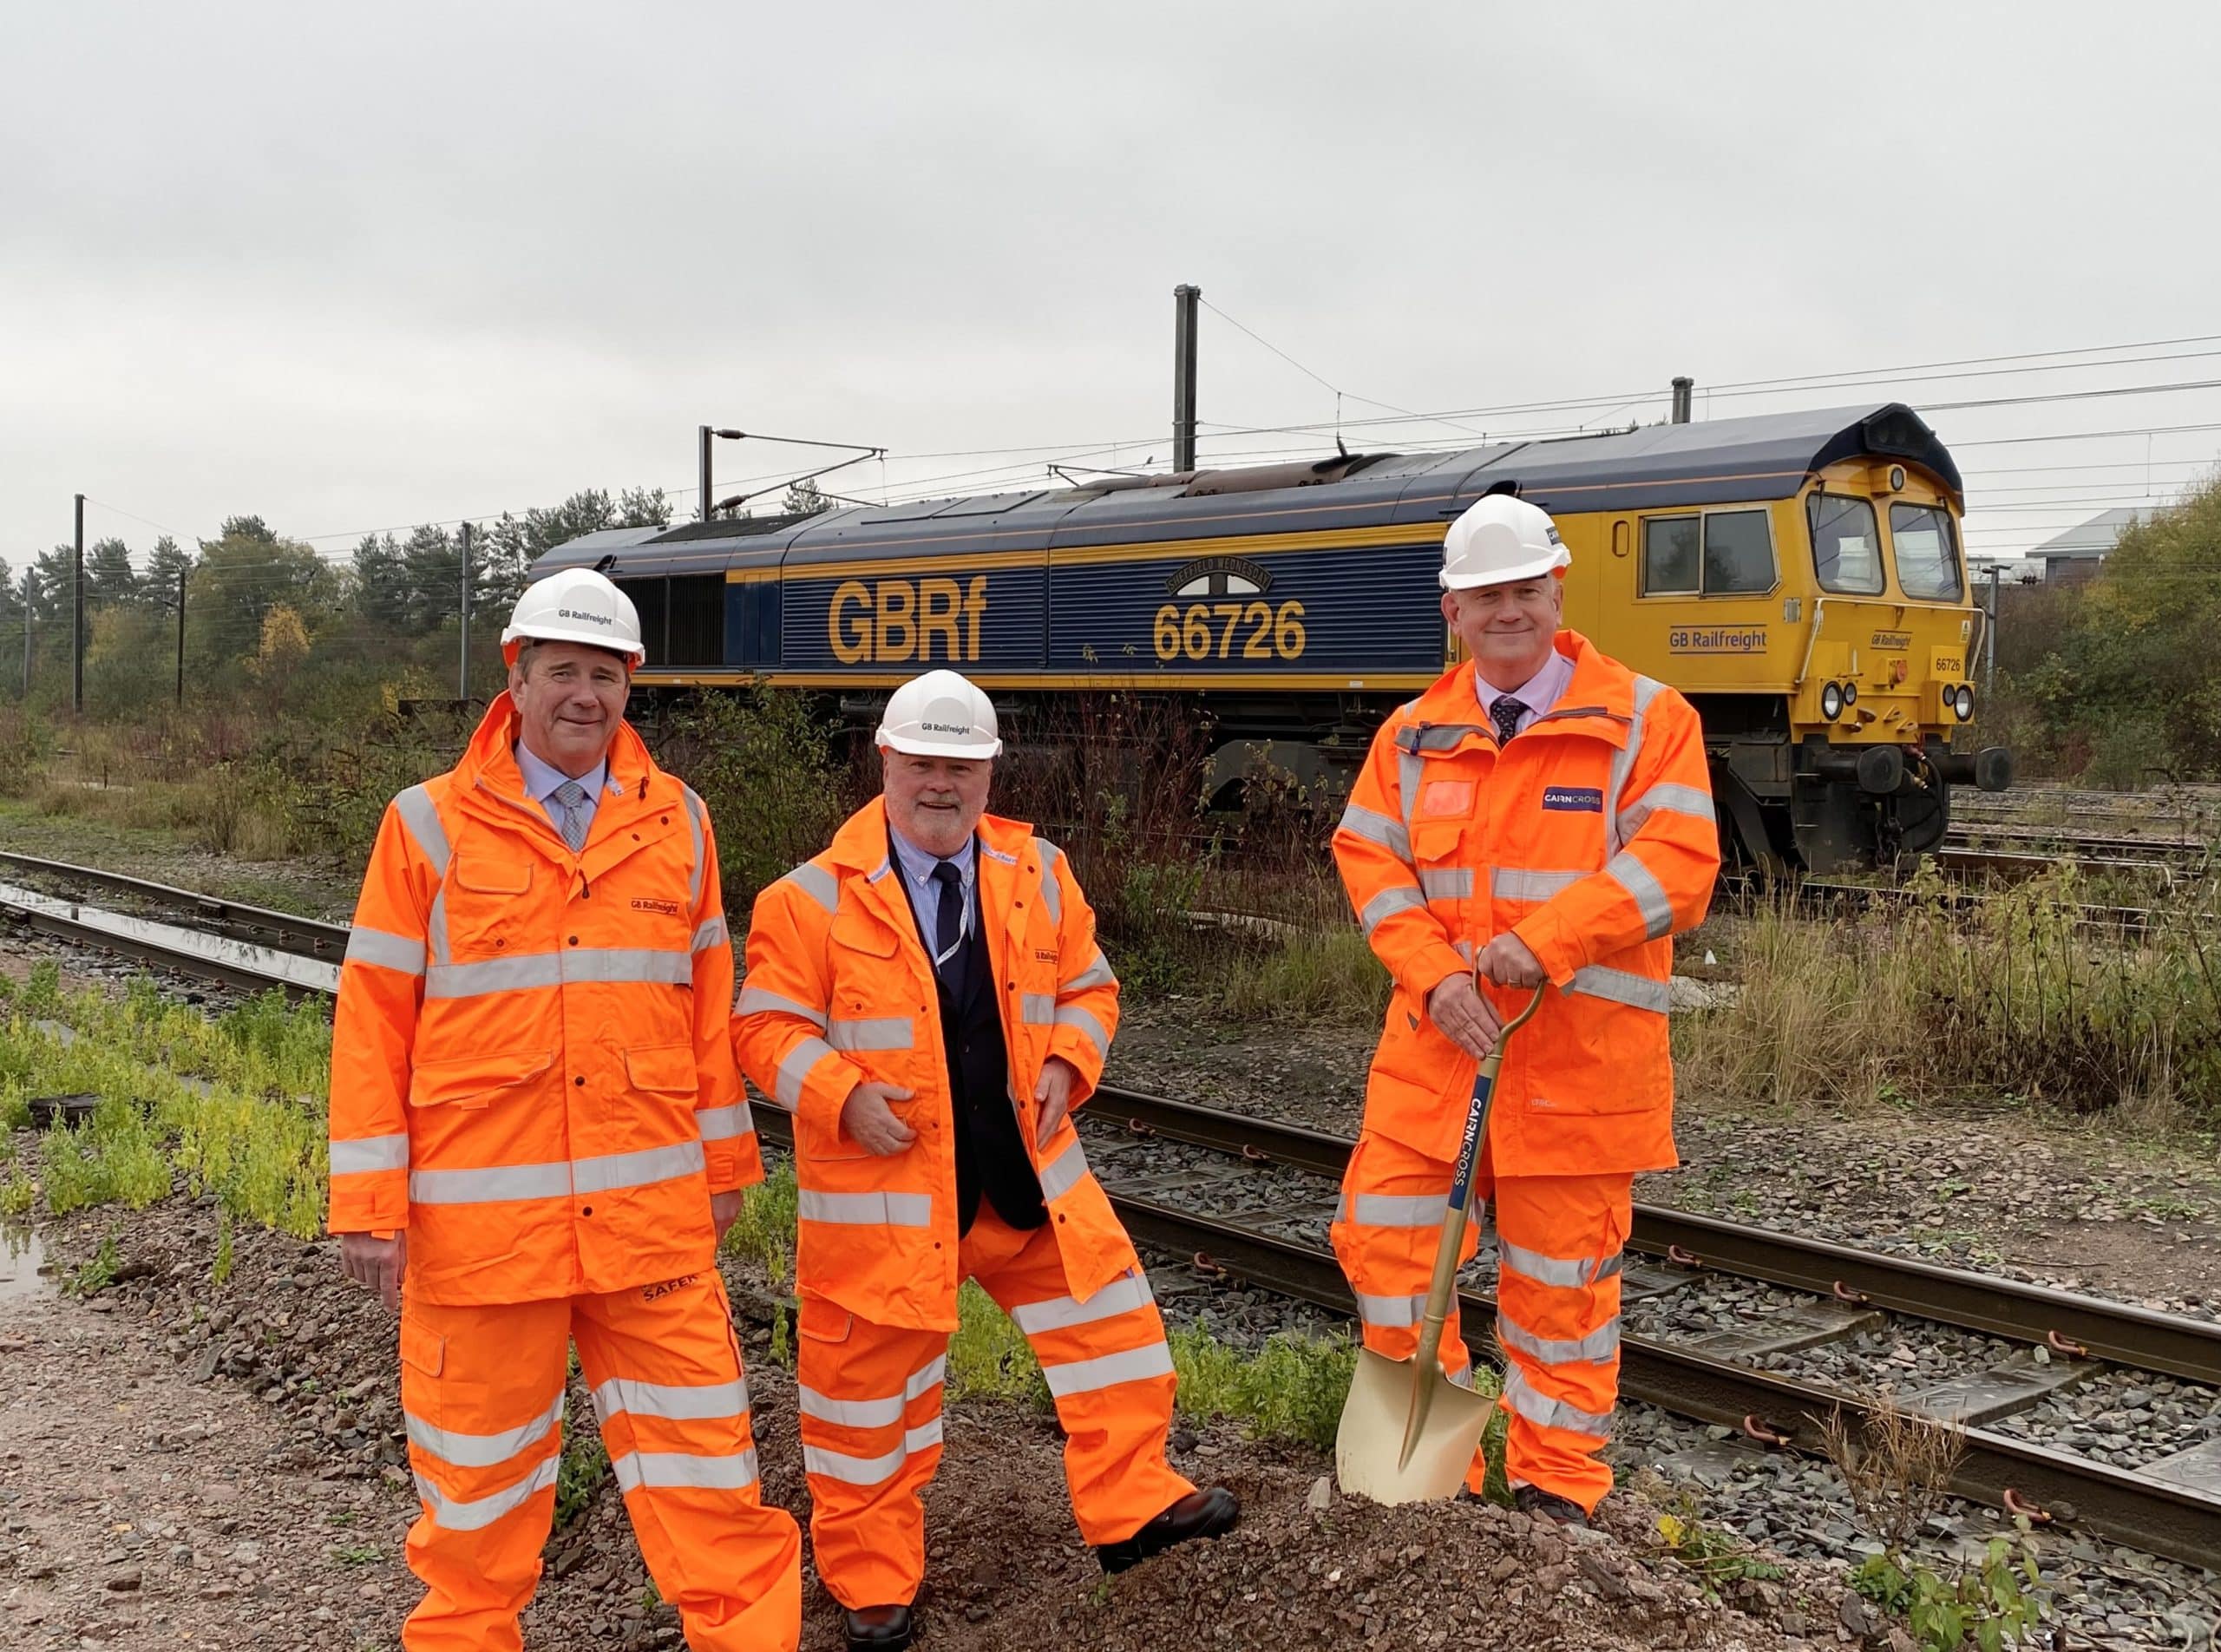 GB Railfreight announces major new investment in Peterborough